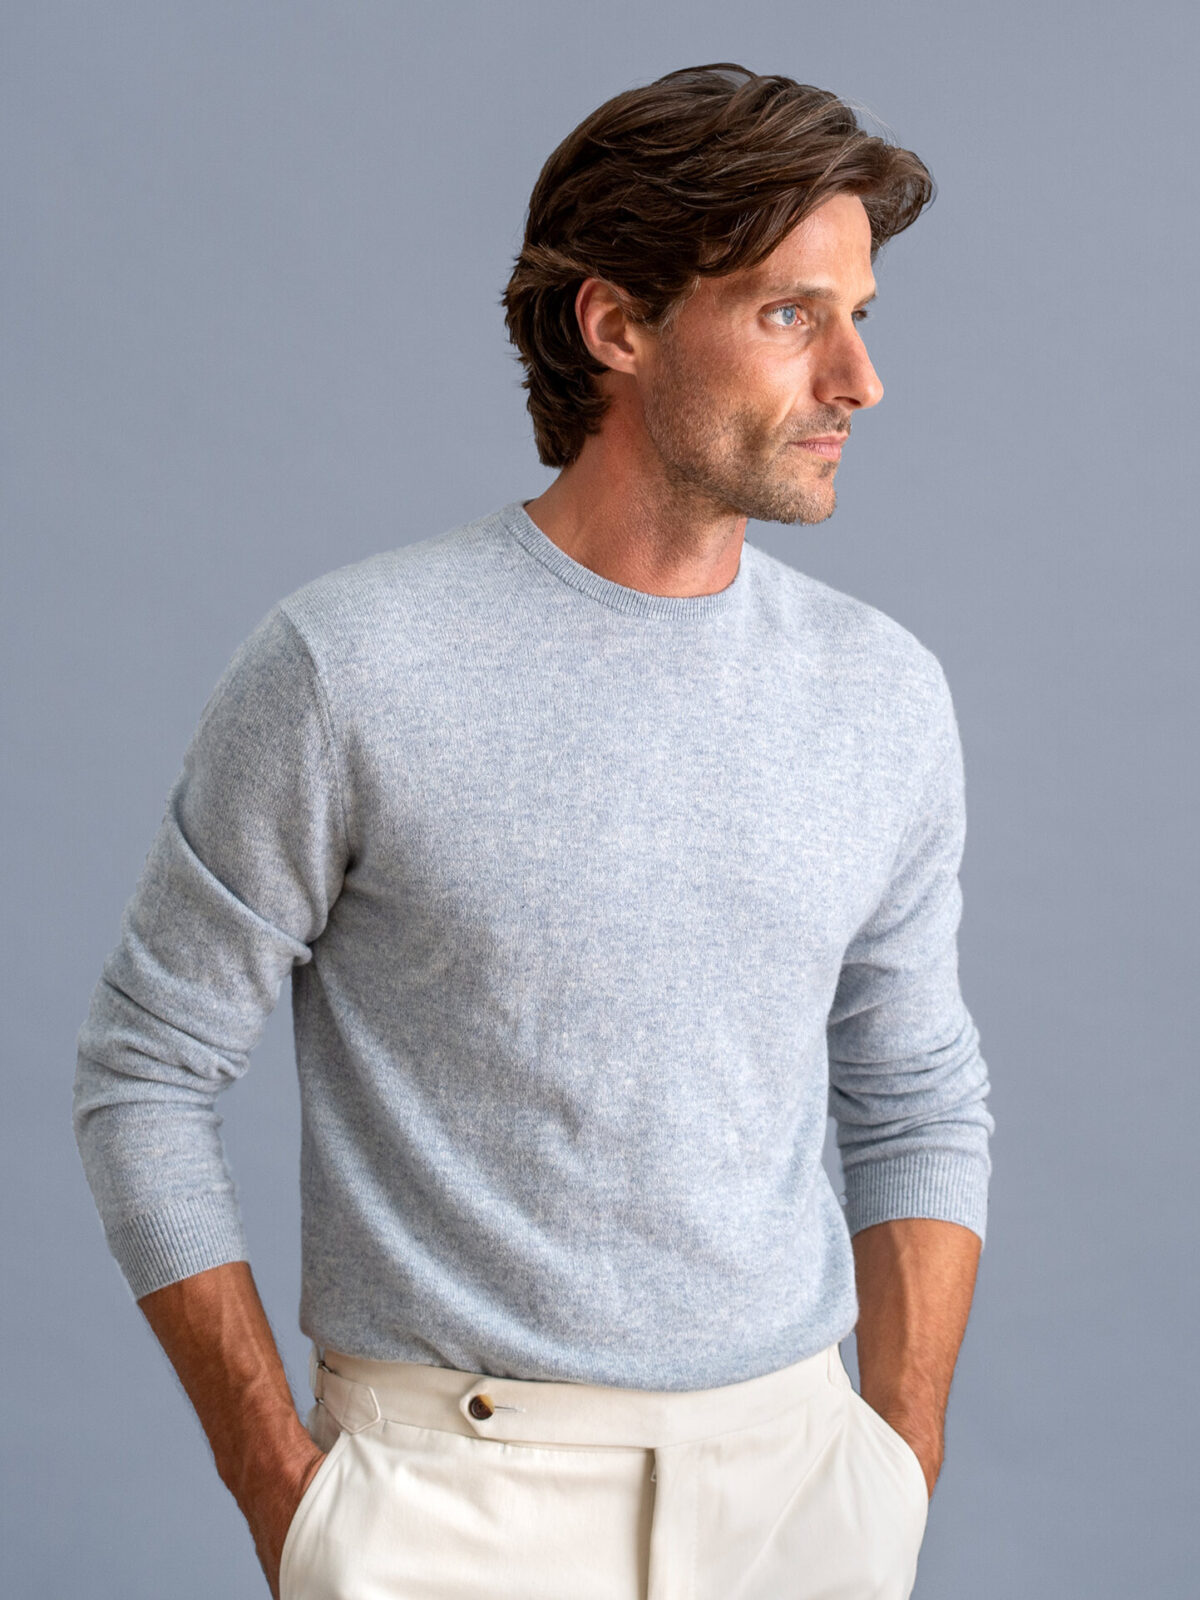 Frost Blue Cashmere Crewneck Sweater